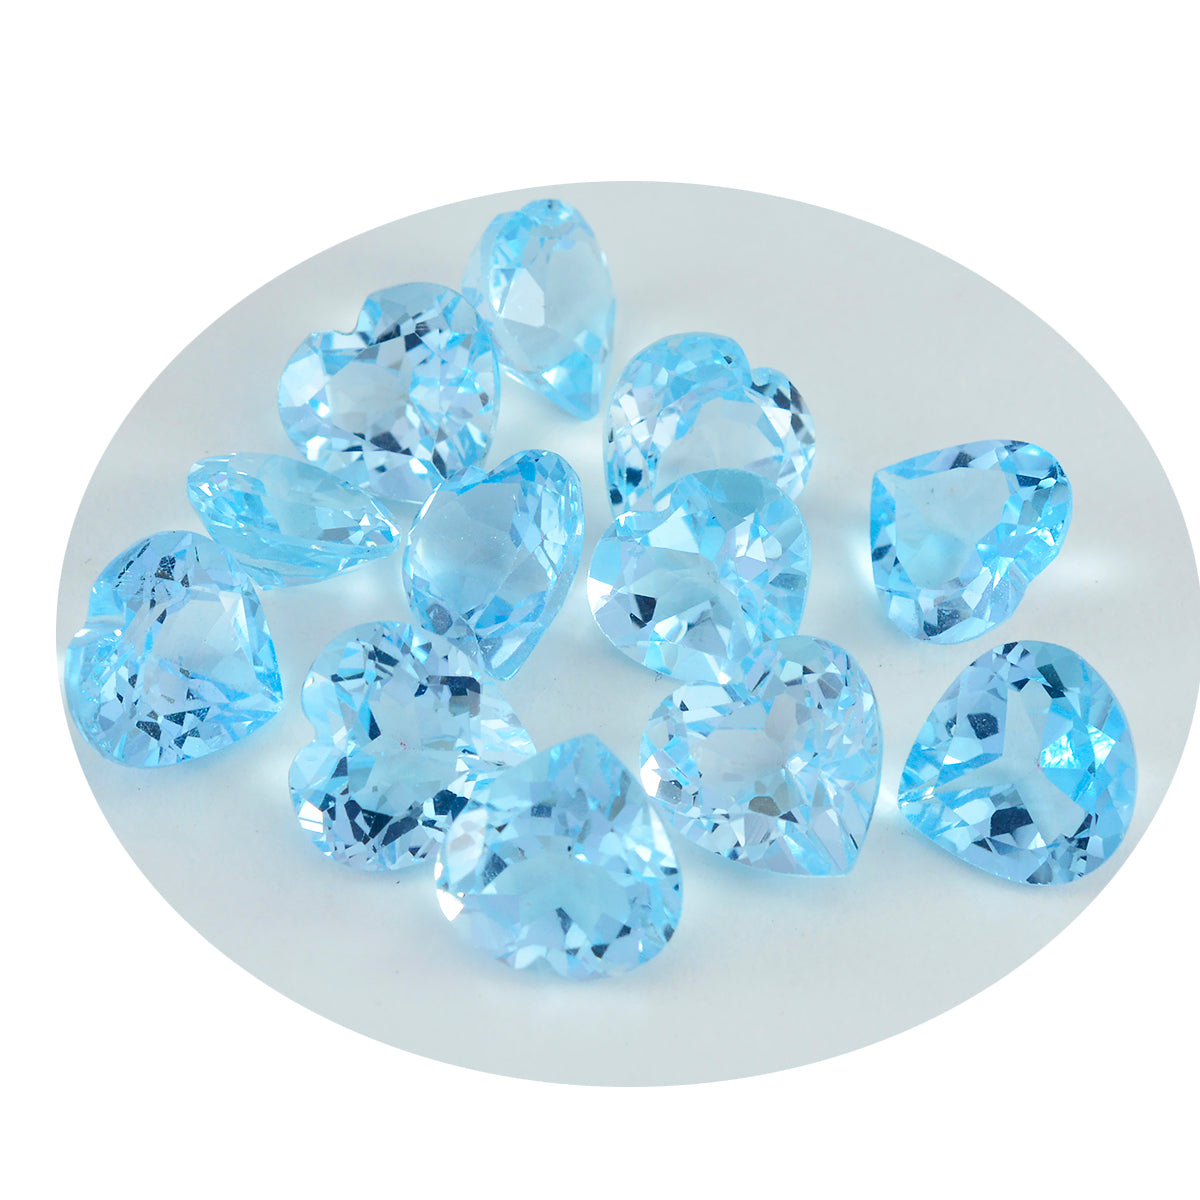 Riyogems 1PC Natural Blue Topaz Faceted 5x5 mm Heart Shape astonishing Quality Gems